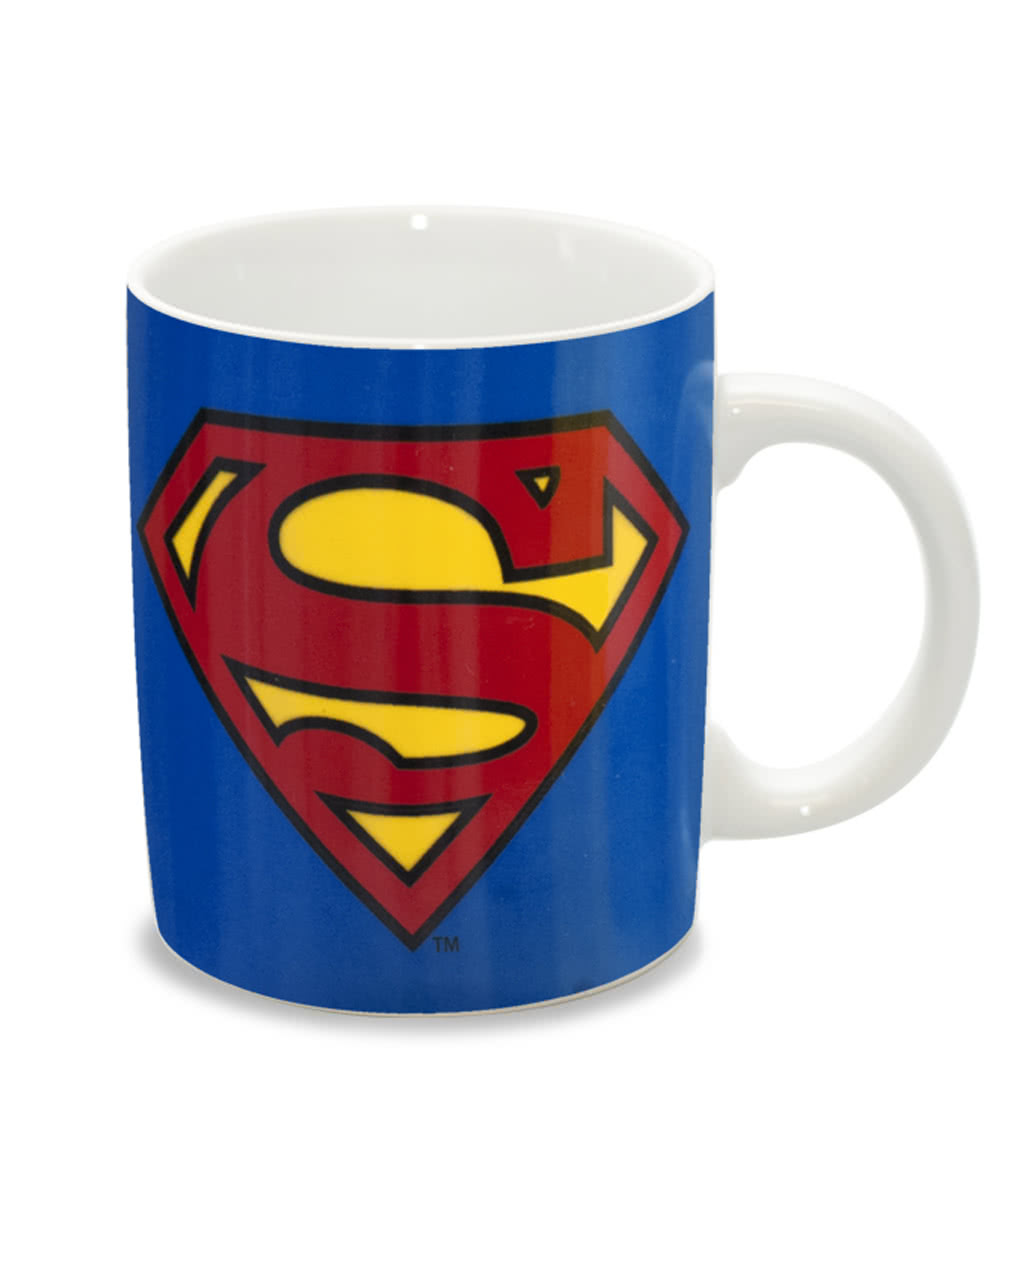 Kitchen Coffee Tea Mug Superman or Batman SUPER HERO COSTUME MUG 330 mls 